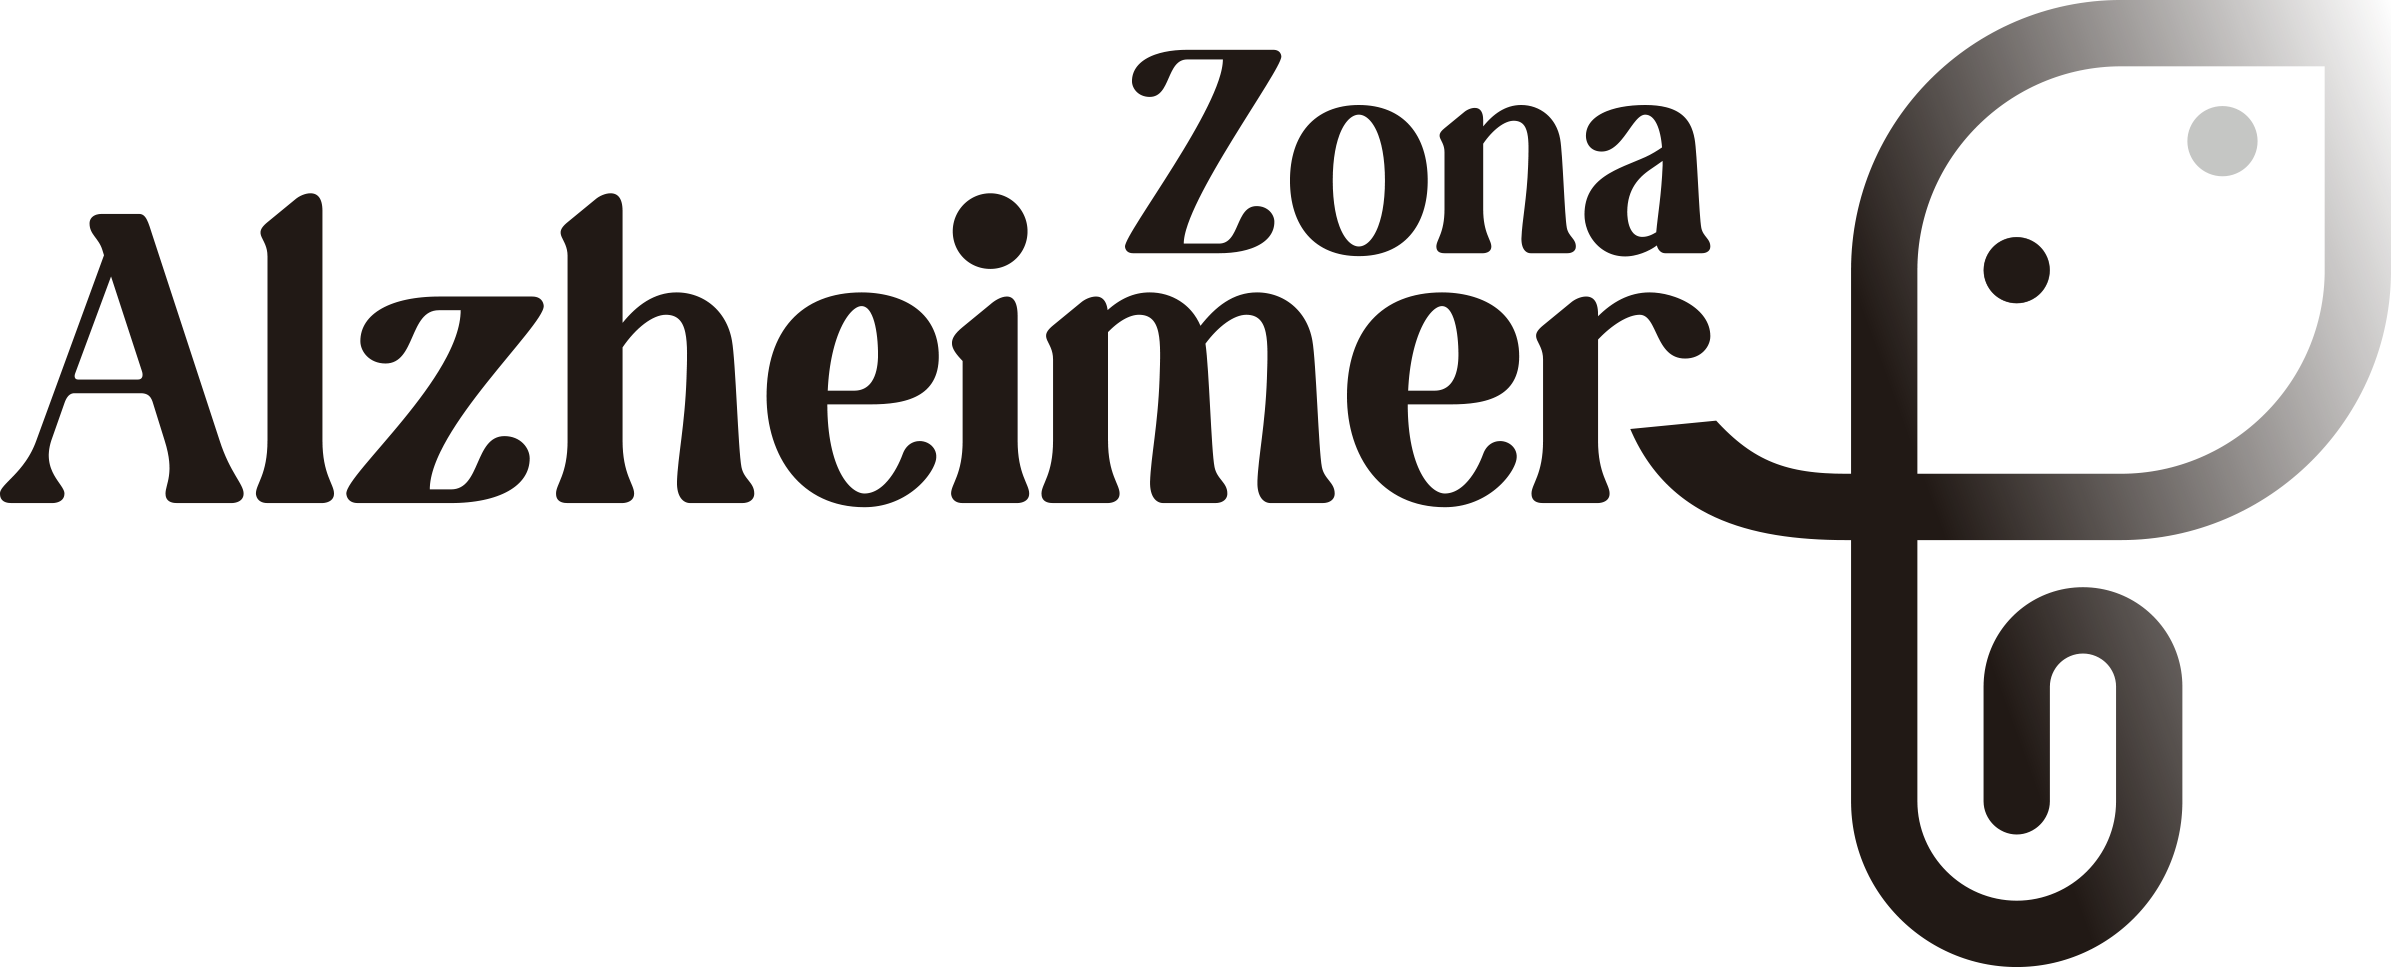 Zona Alzheimer